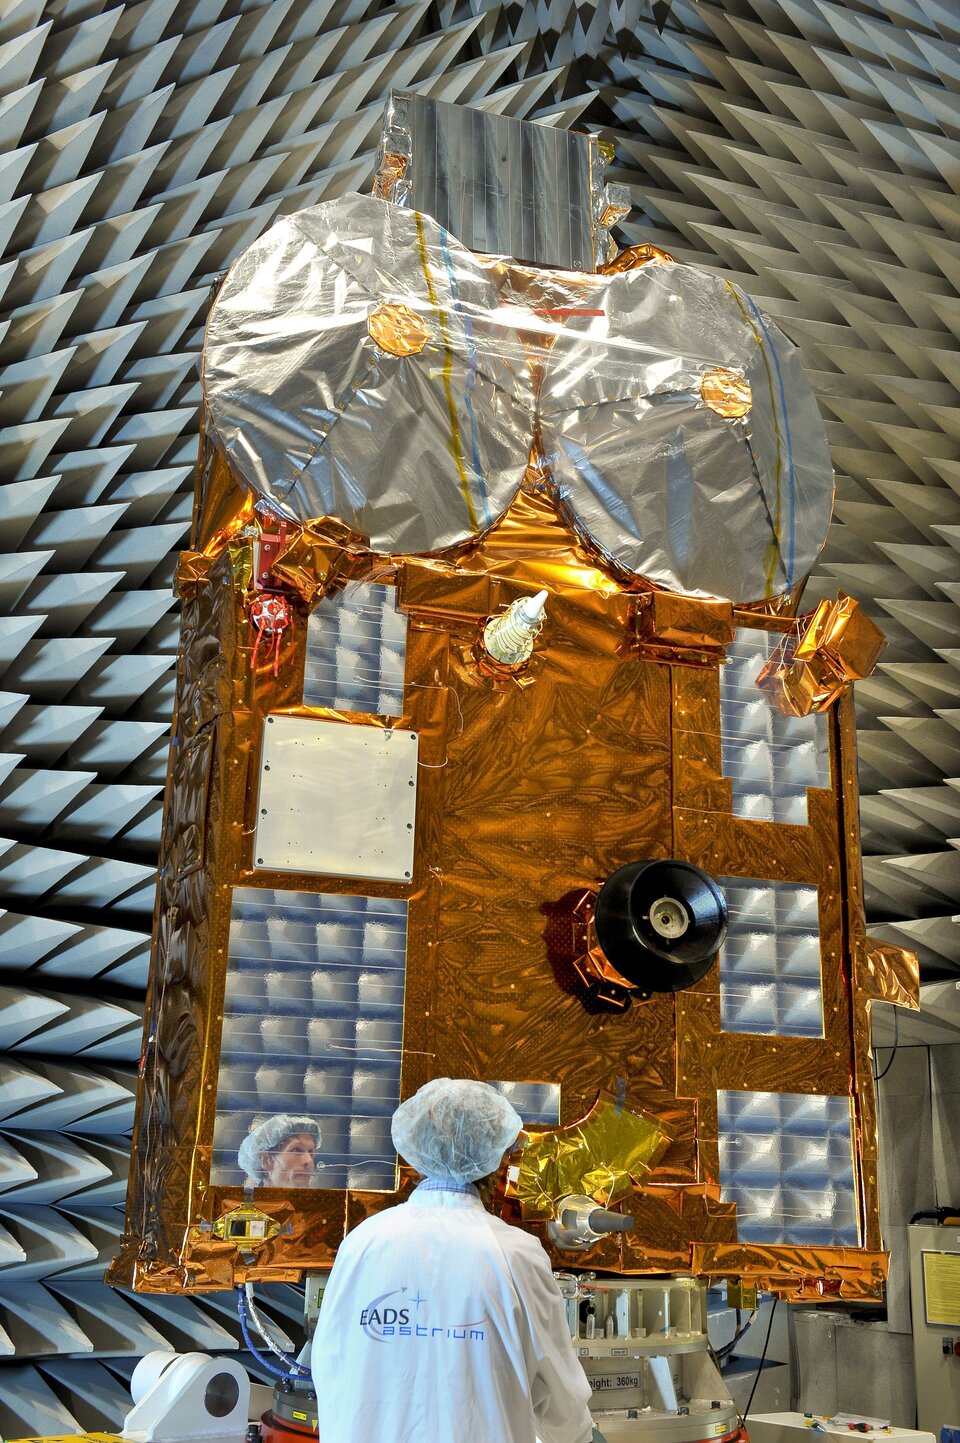 CryoSat-2 undergoing testing